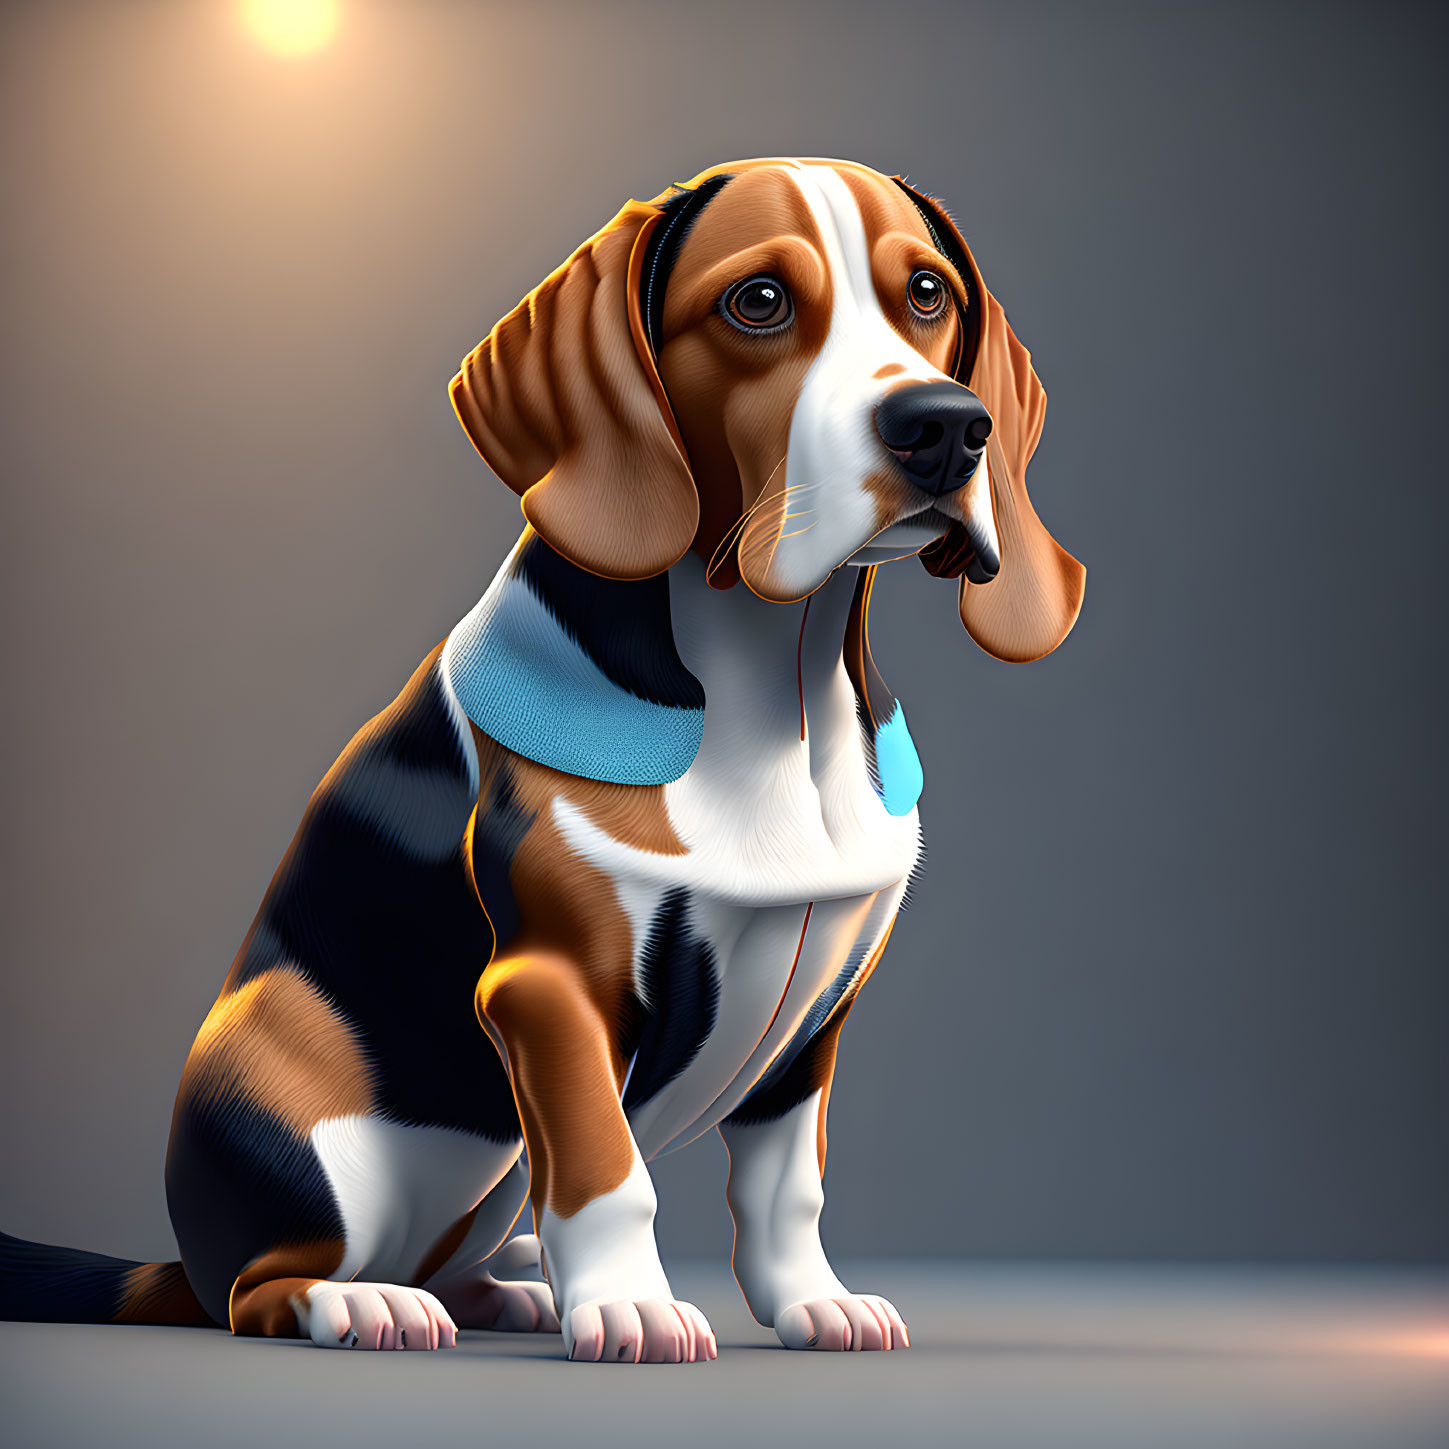 Cartoon-style 3D beagle illustration on grey background